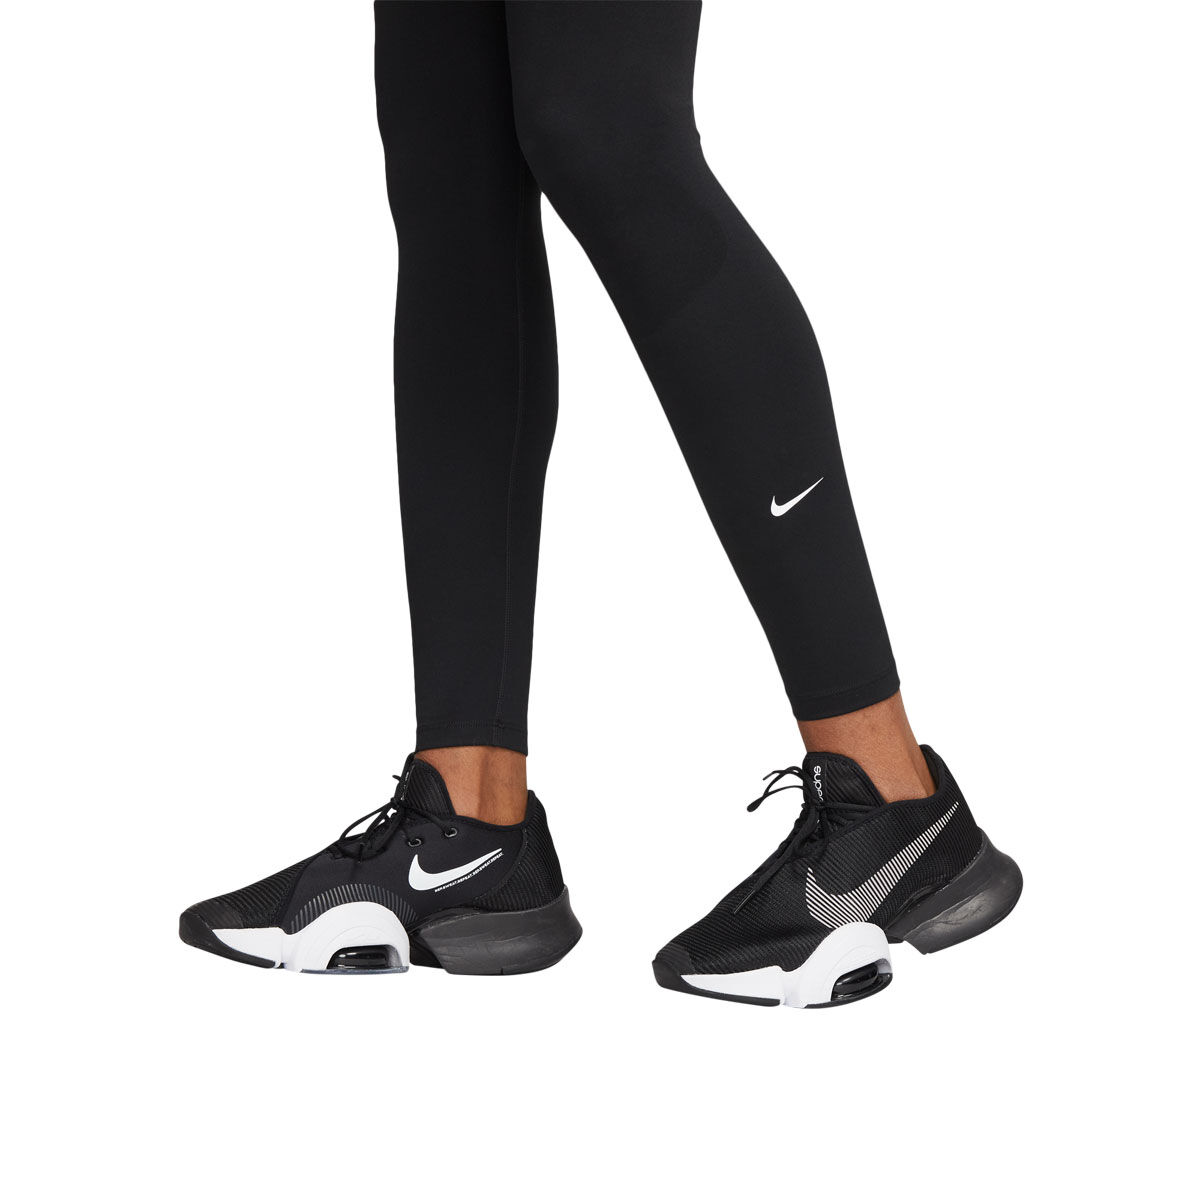 Women's high-waisted leggings Nike One Dri-FIT - Woman - Beach